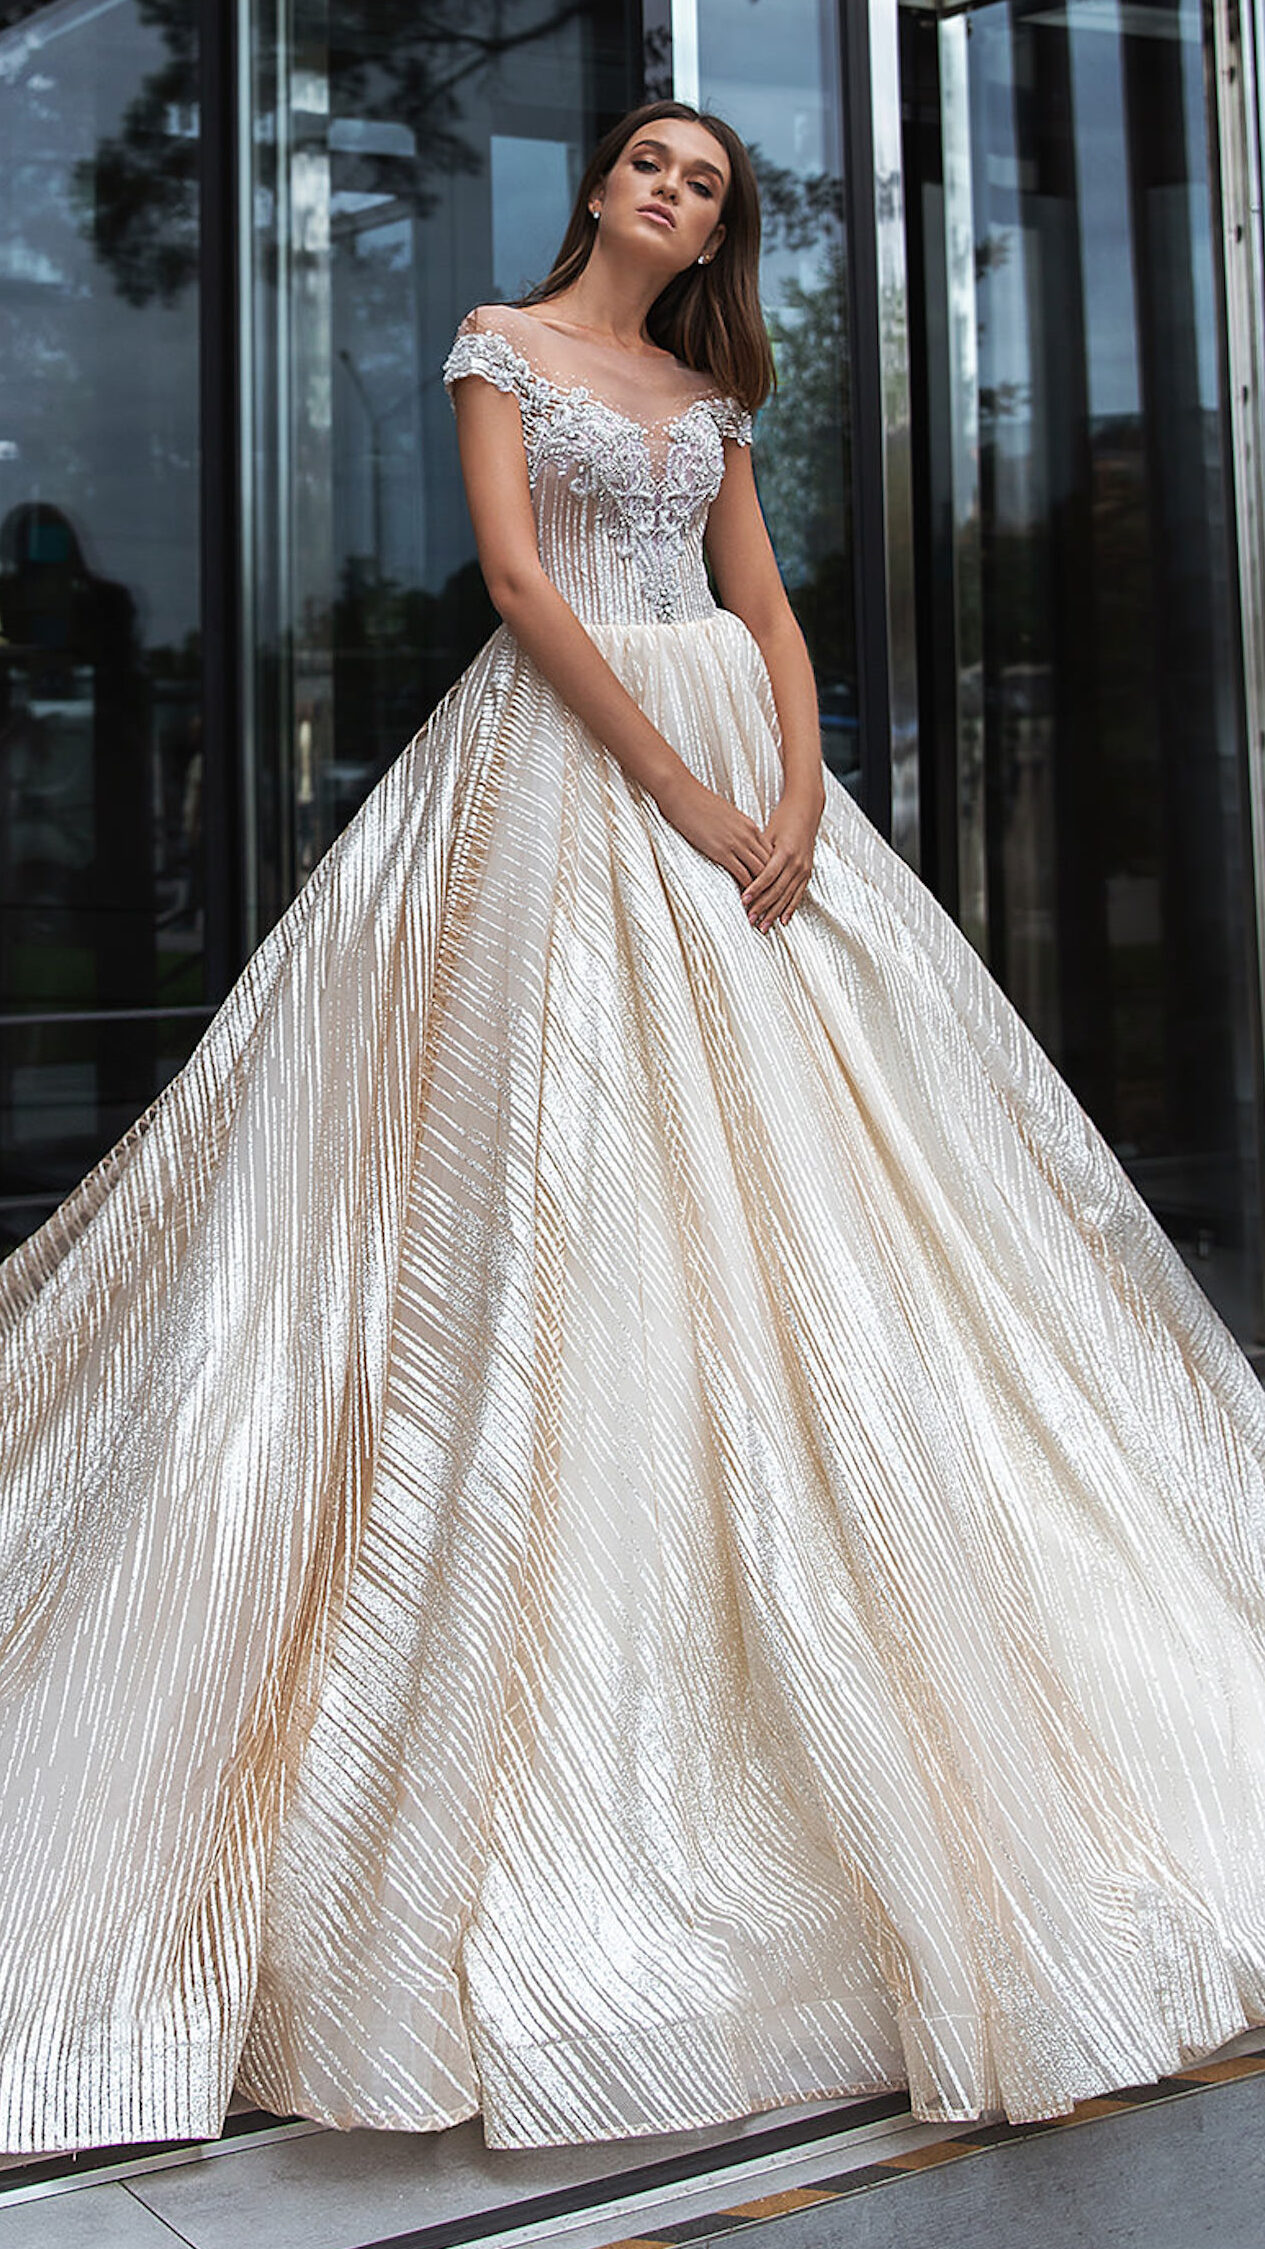 Diana by Oliver Martino wedding dress